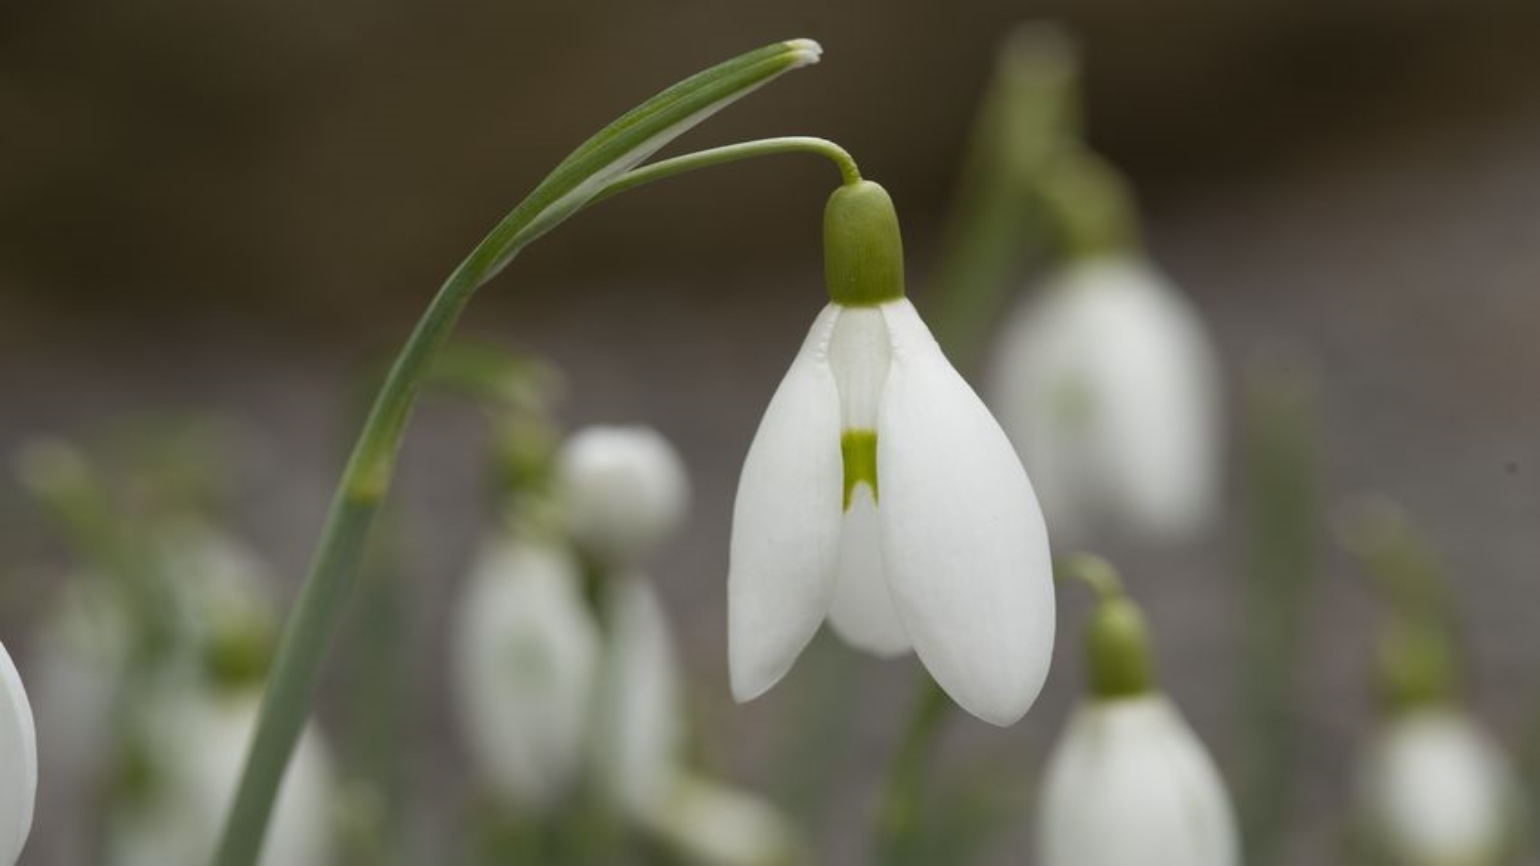 Nodding, white flowers of the common snowdrop